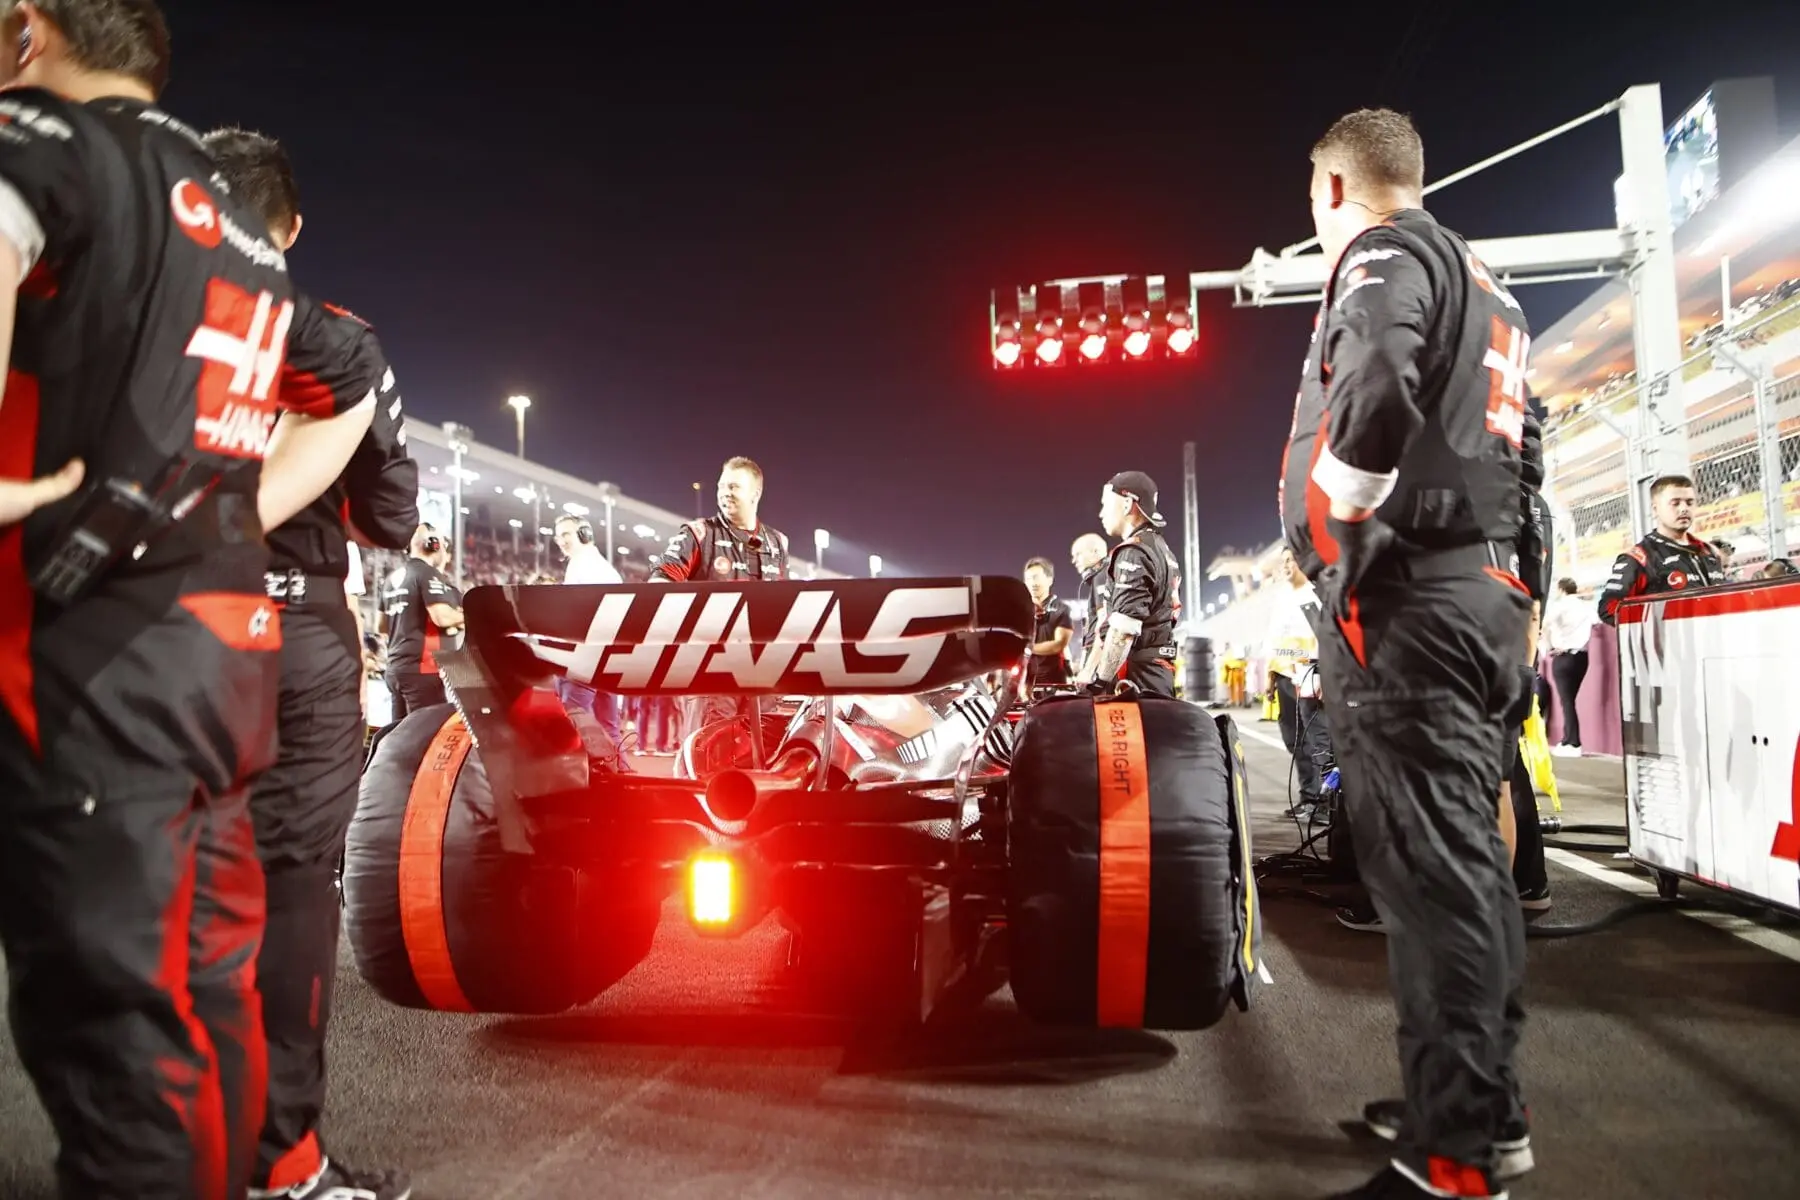 Haas rear image of car